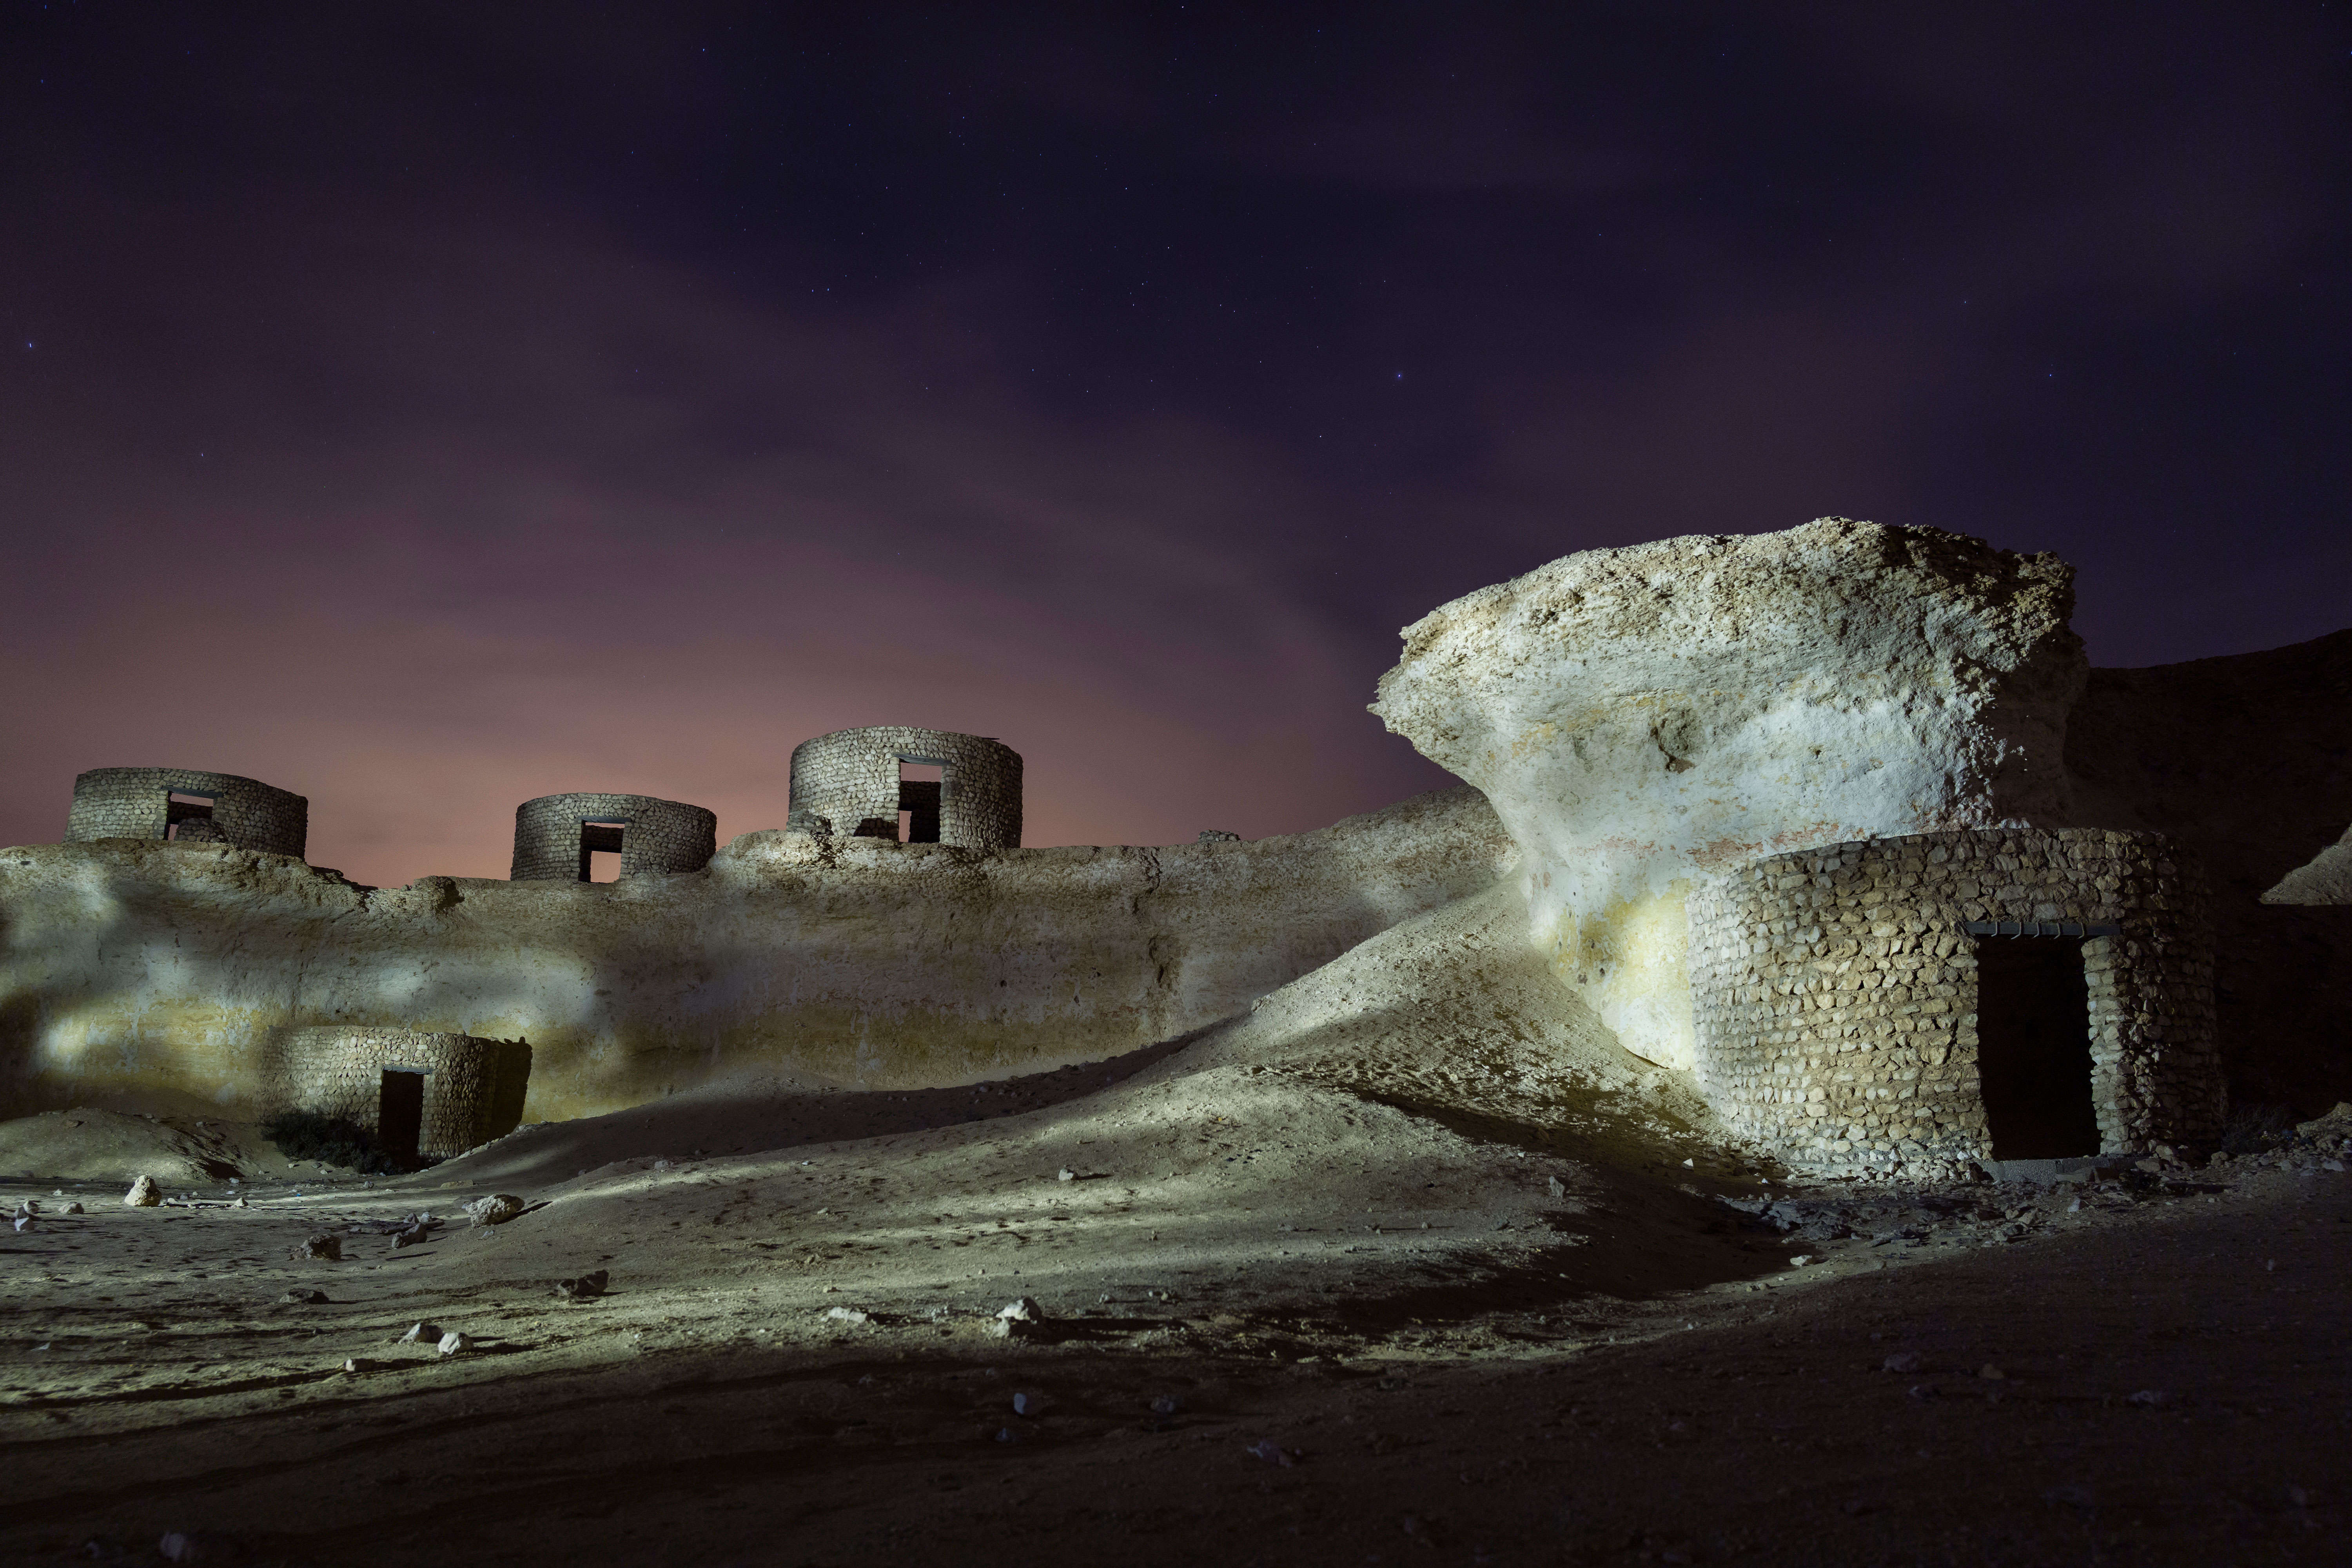 Rock formations in the Qatari desert